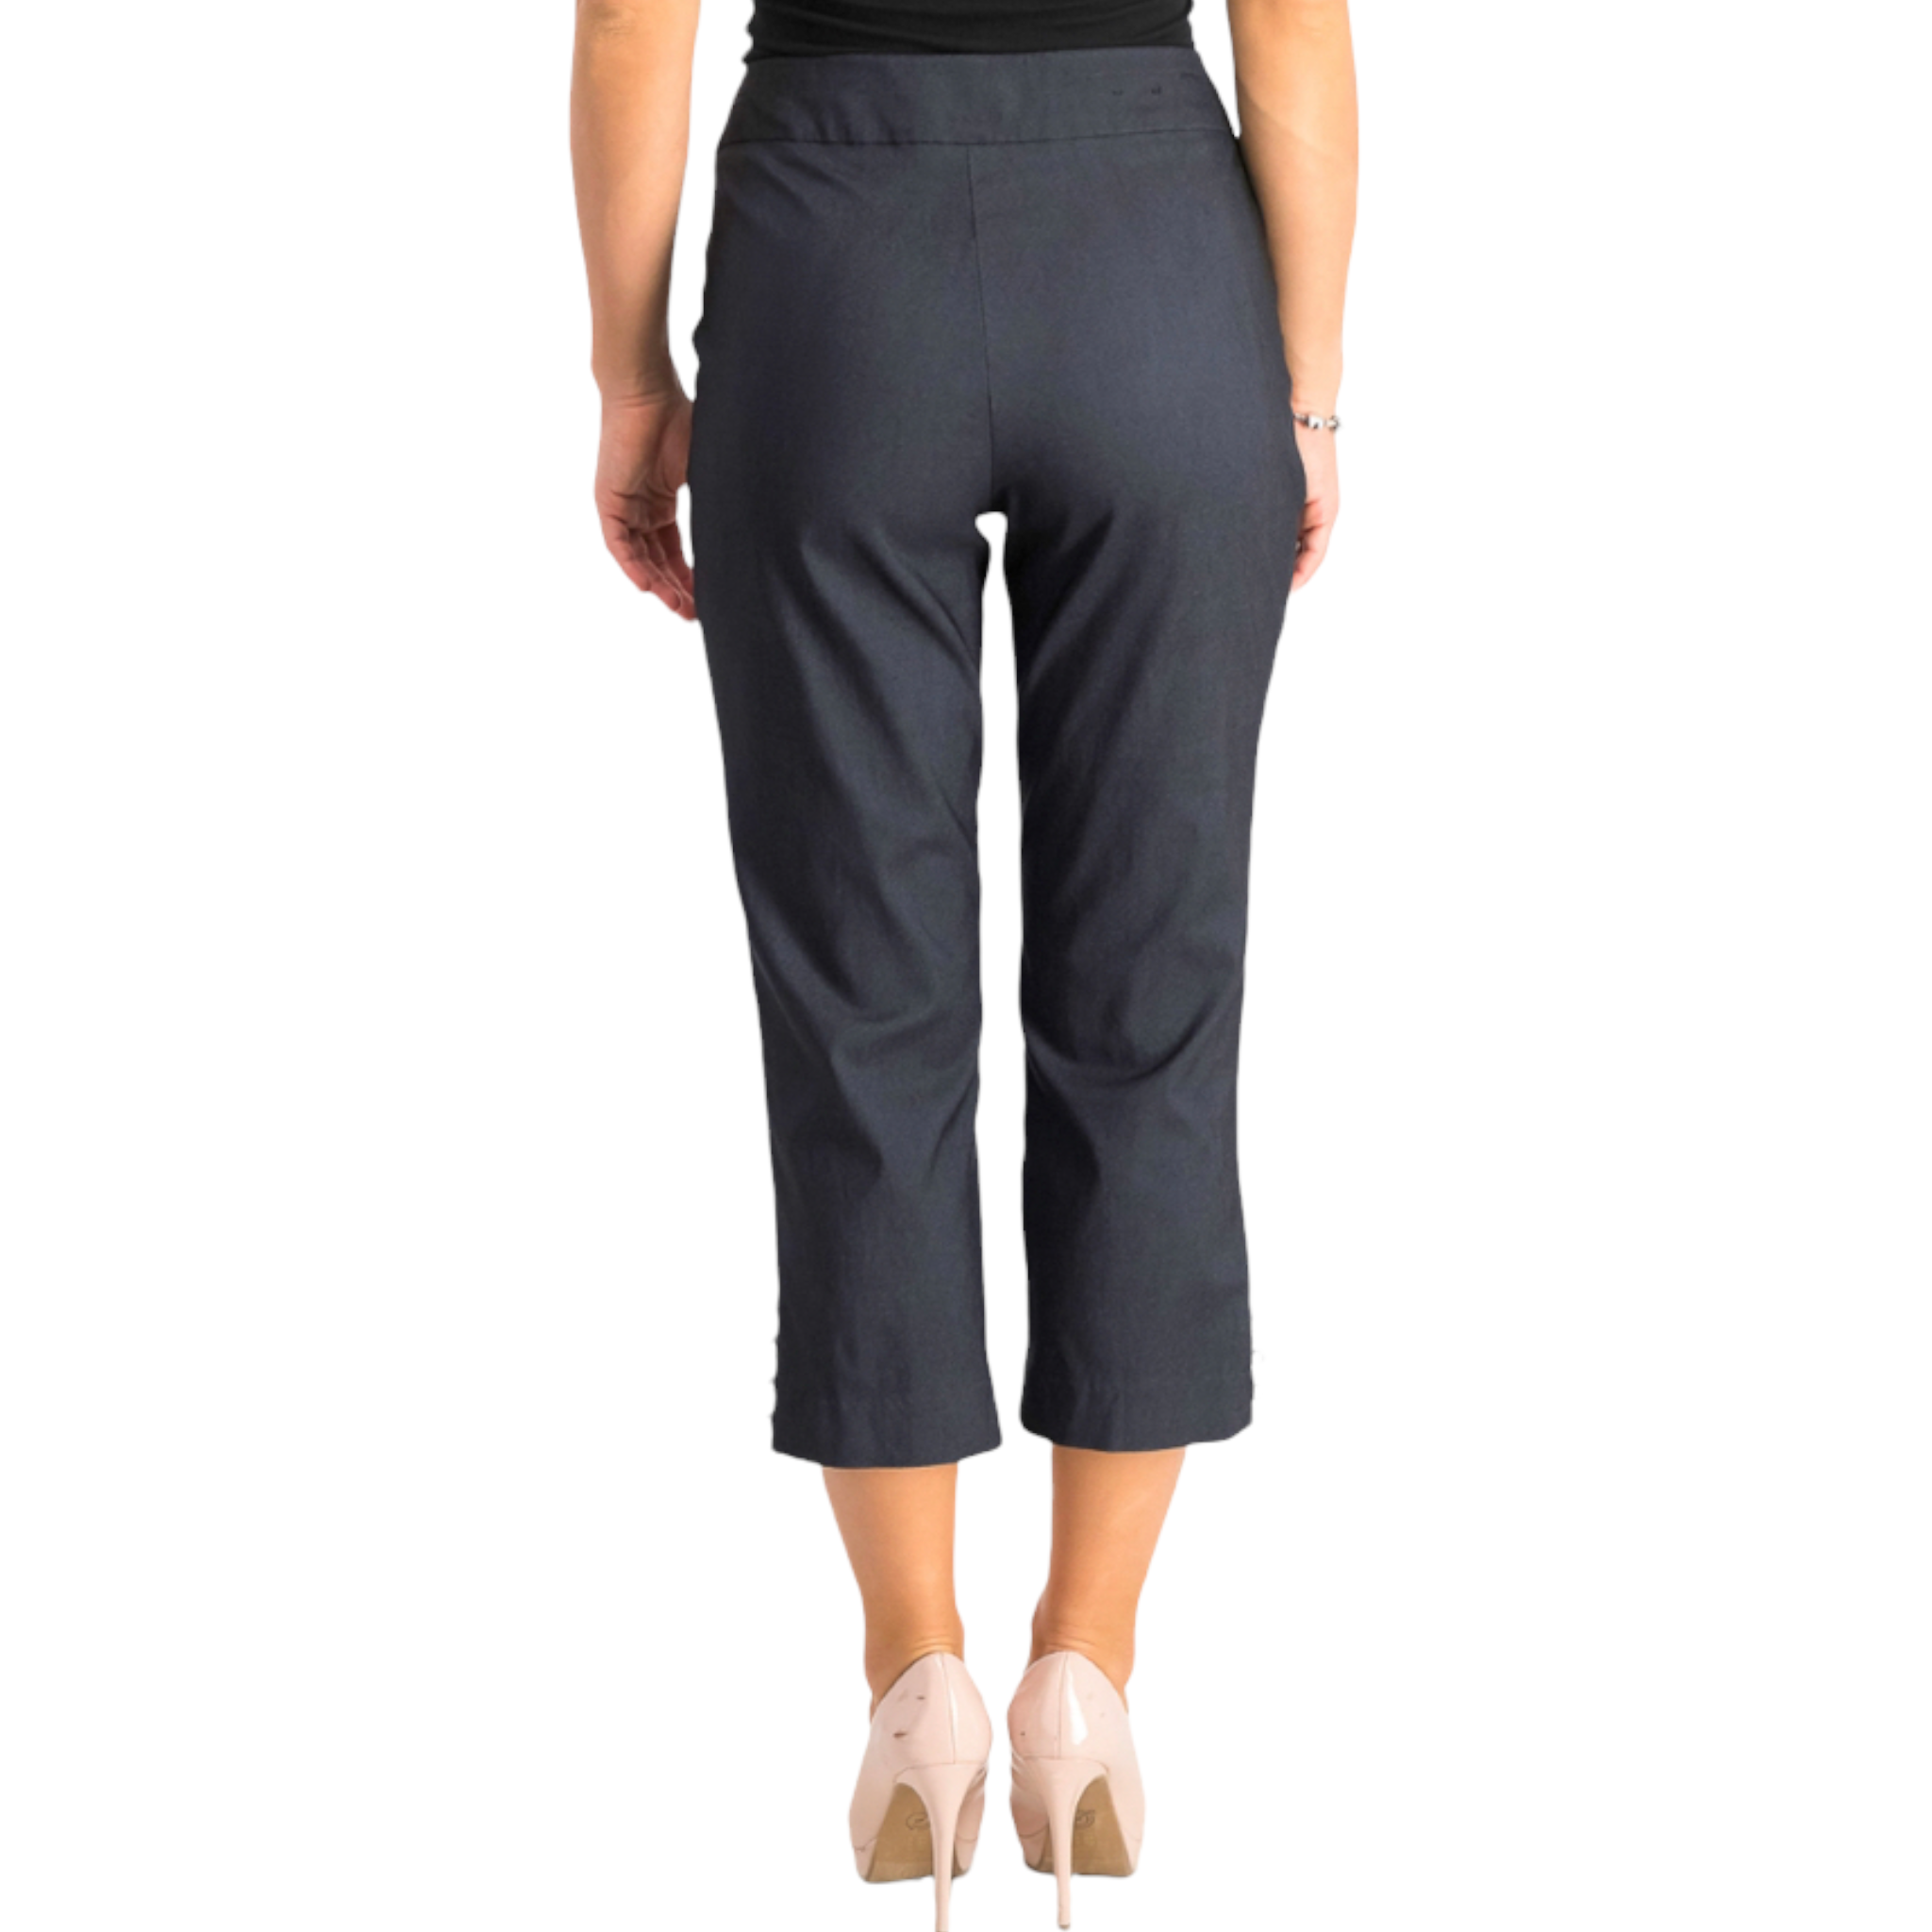 Women's Pull-on Lattice-Inset Capri Pants